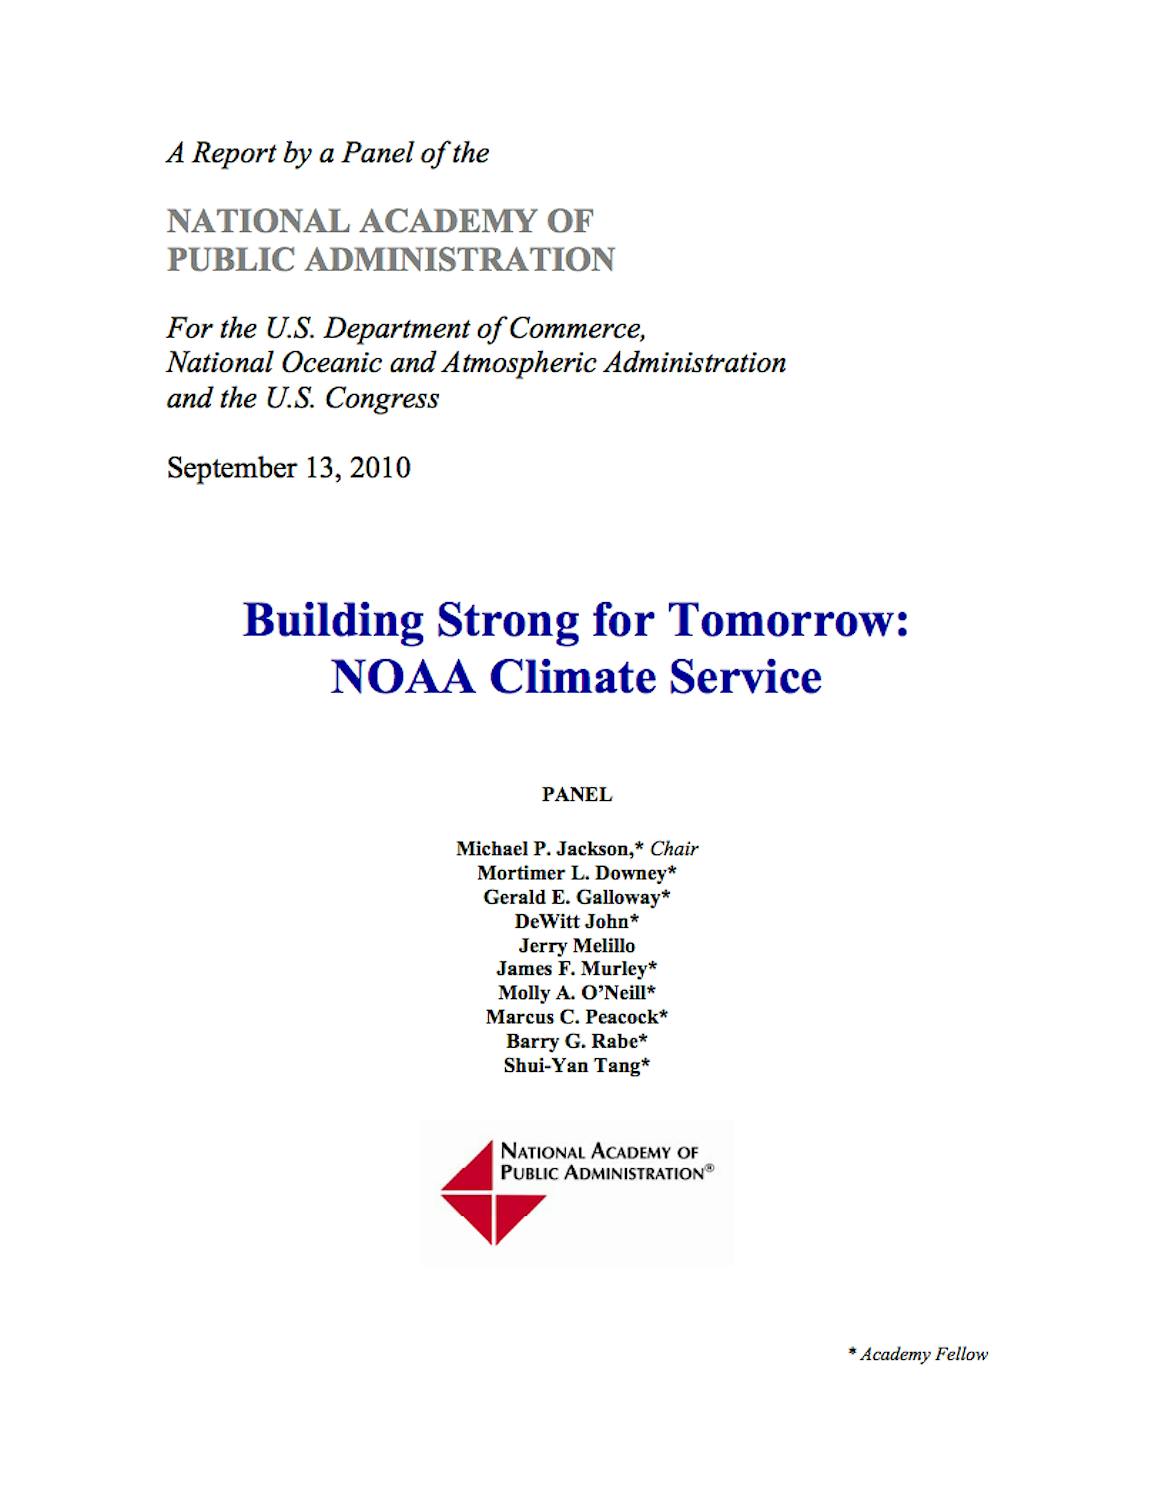 NAPA Final Report NOAA Climate Service Study September 20101